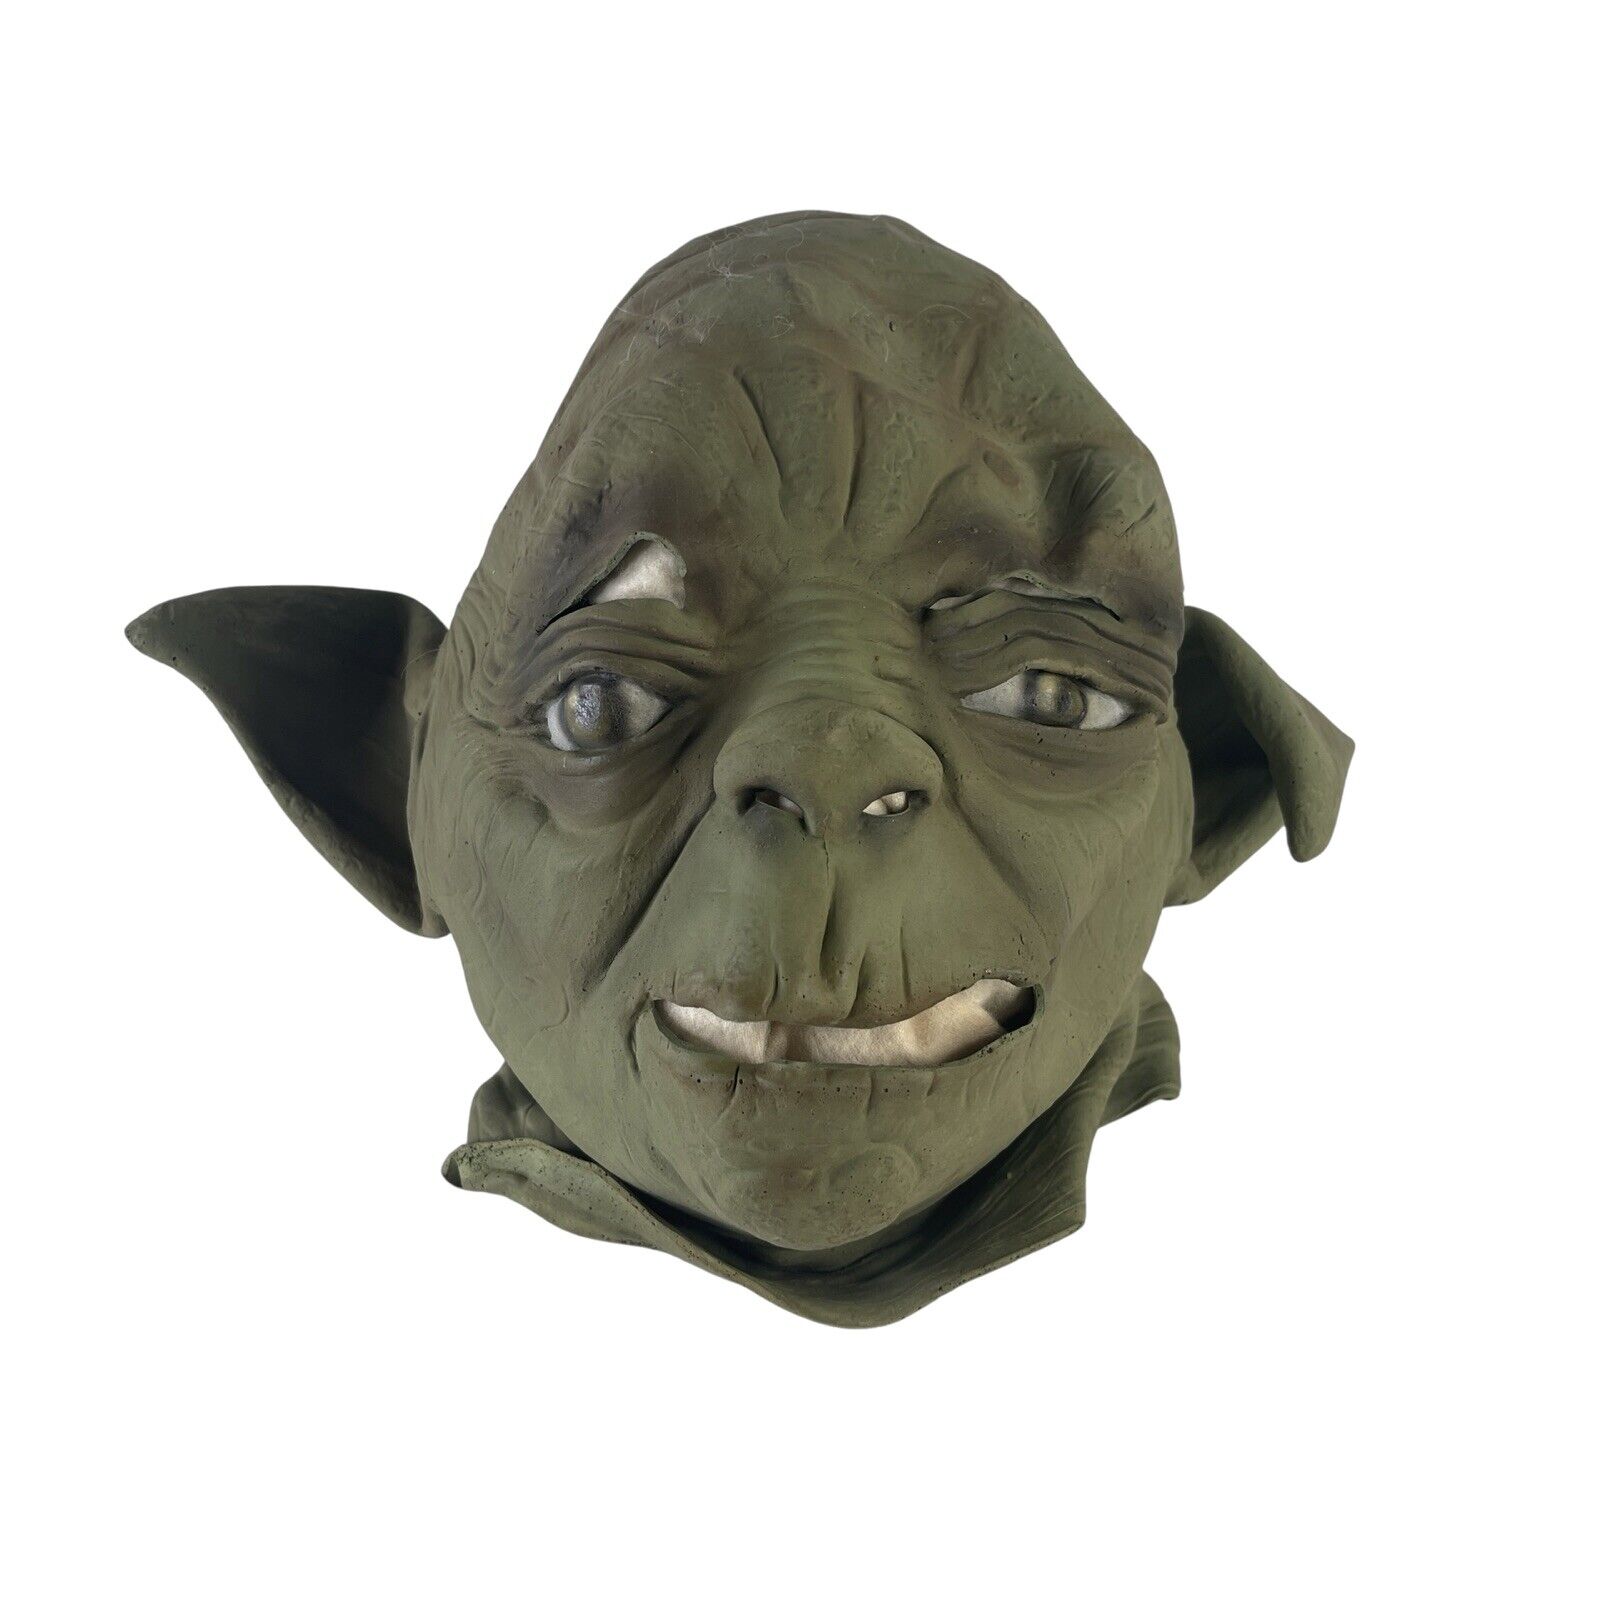 1980 Vintage Don Post Star Wars Yoda Latex Mask ESB Empire Strikes Back Used